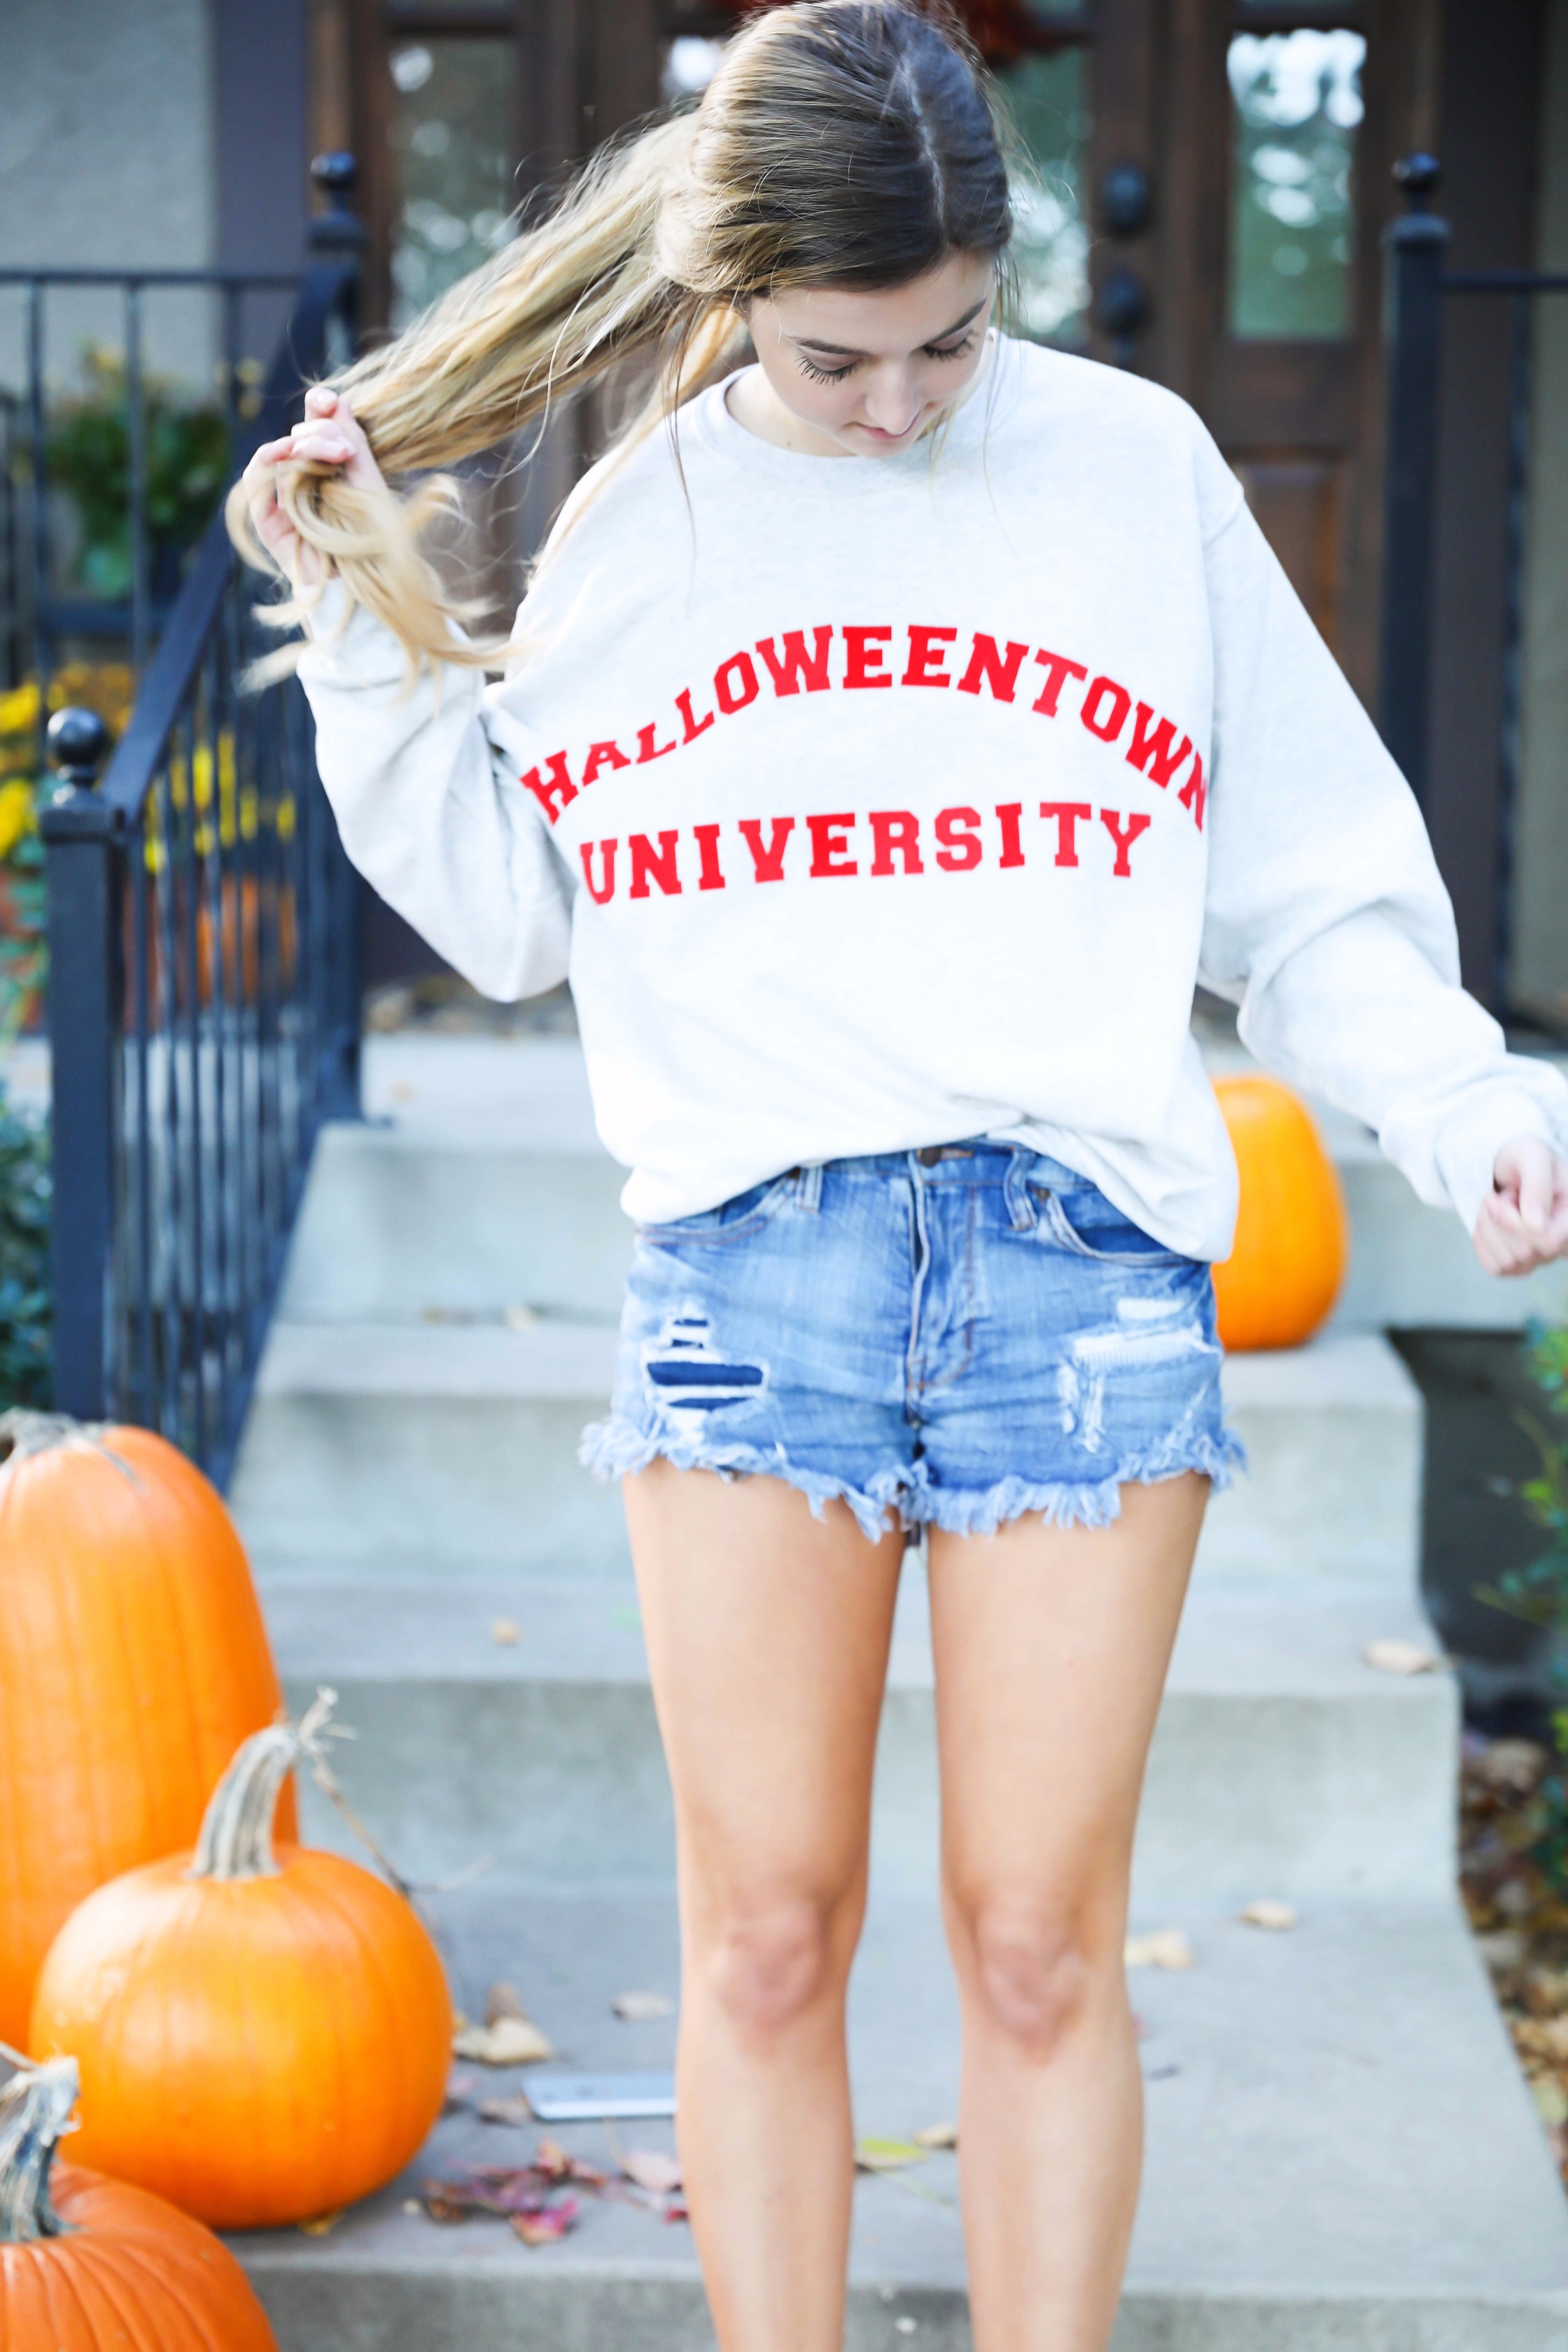 Halloweentown univeristy sweatshirt DIY! Easy last minute halloween costumes details on fashion blog daily dose of charm by lauren lindmark